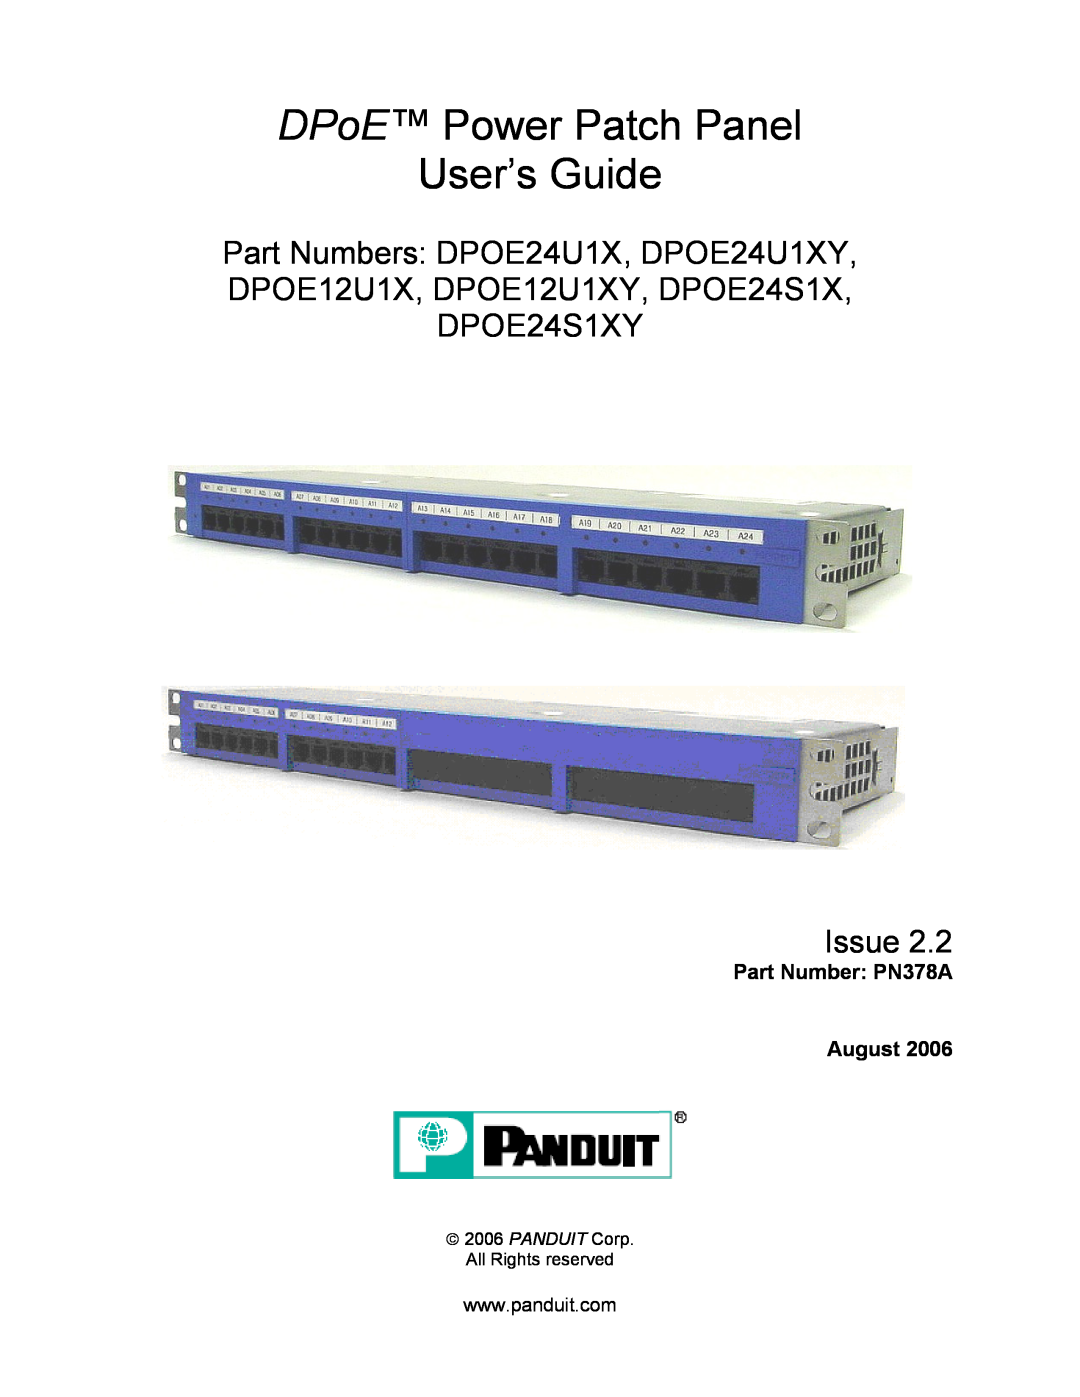 Panduit DPOE24S1XY, DPOE24U1X, DPOE12U1XY manual Part Number PN378A August, DPoE Power Patch Panel User’s Guide, Issue 